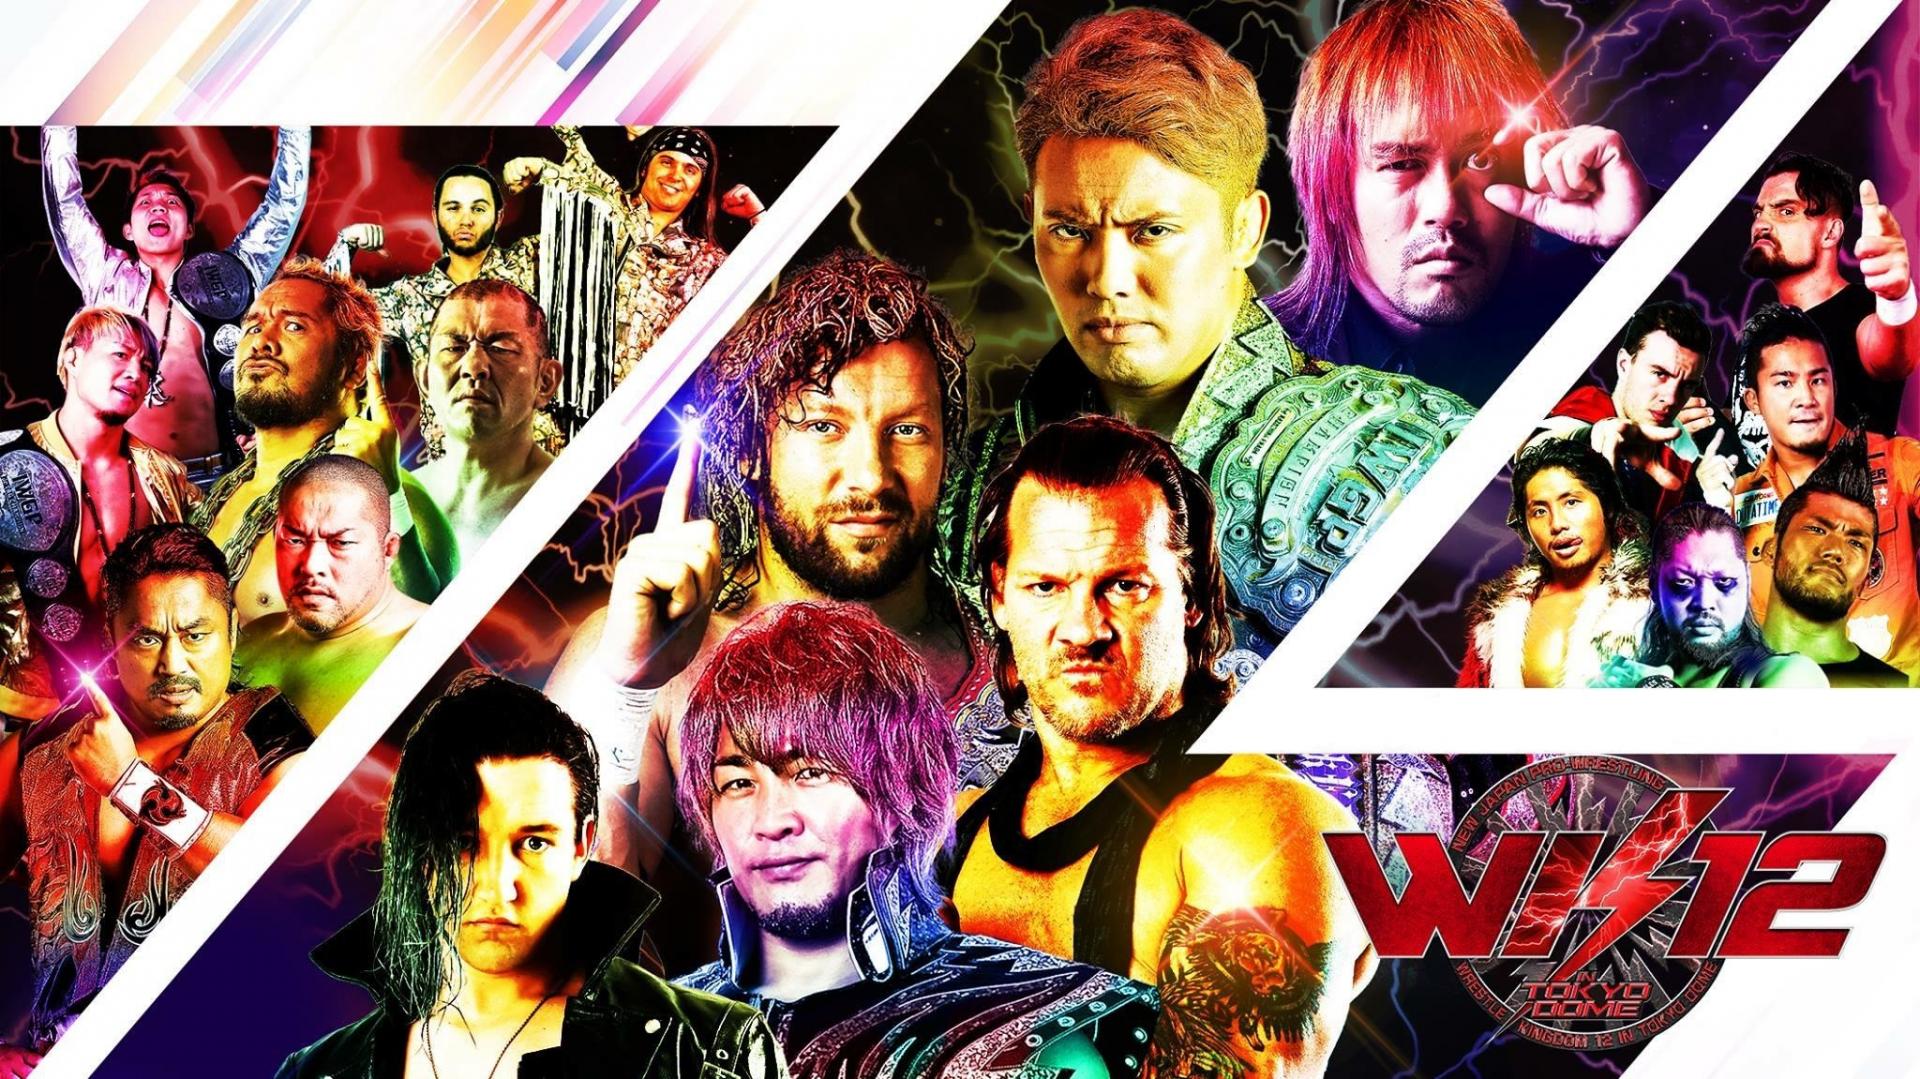 Wrestle kingdom 12 poster